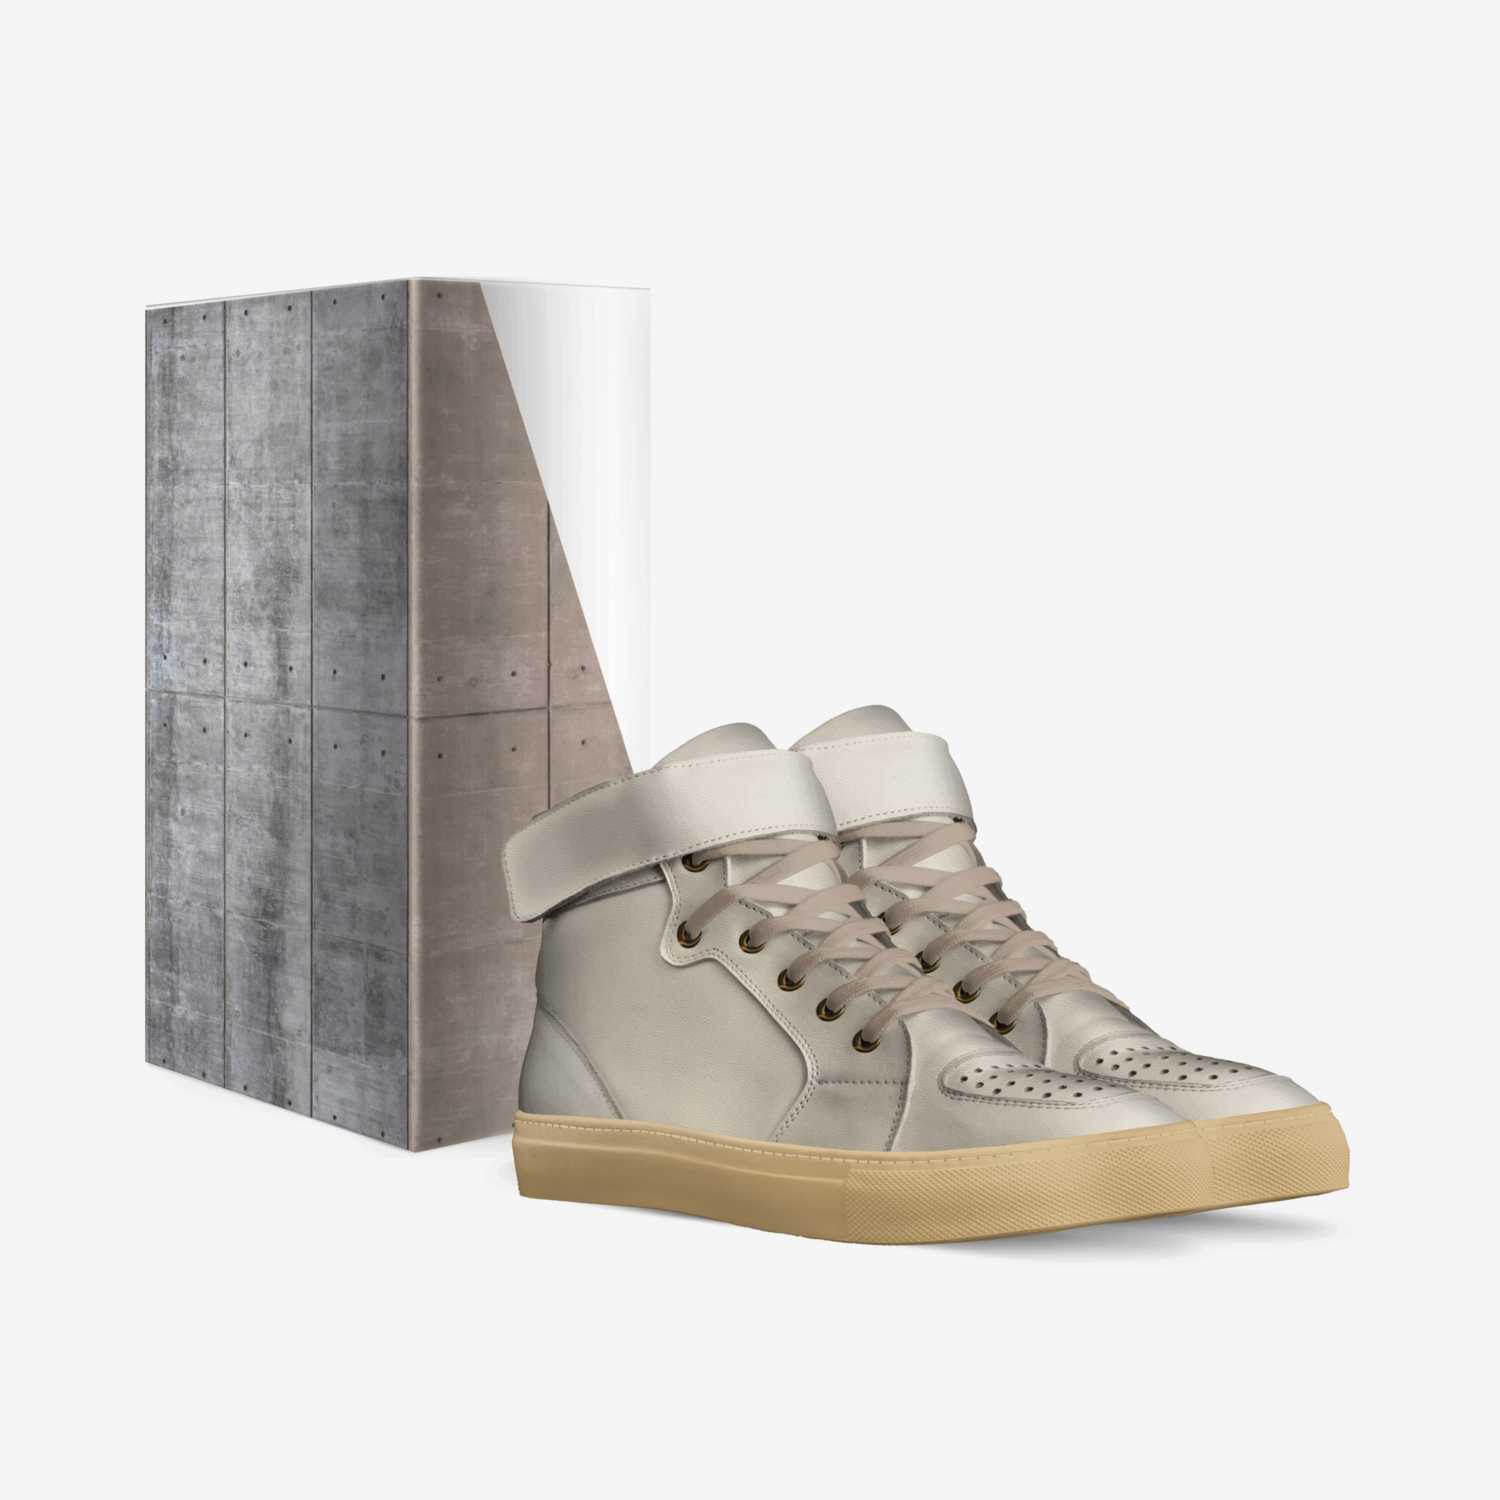 kato frank custom made in Italy shoes by Kato Frank | Box view